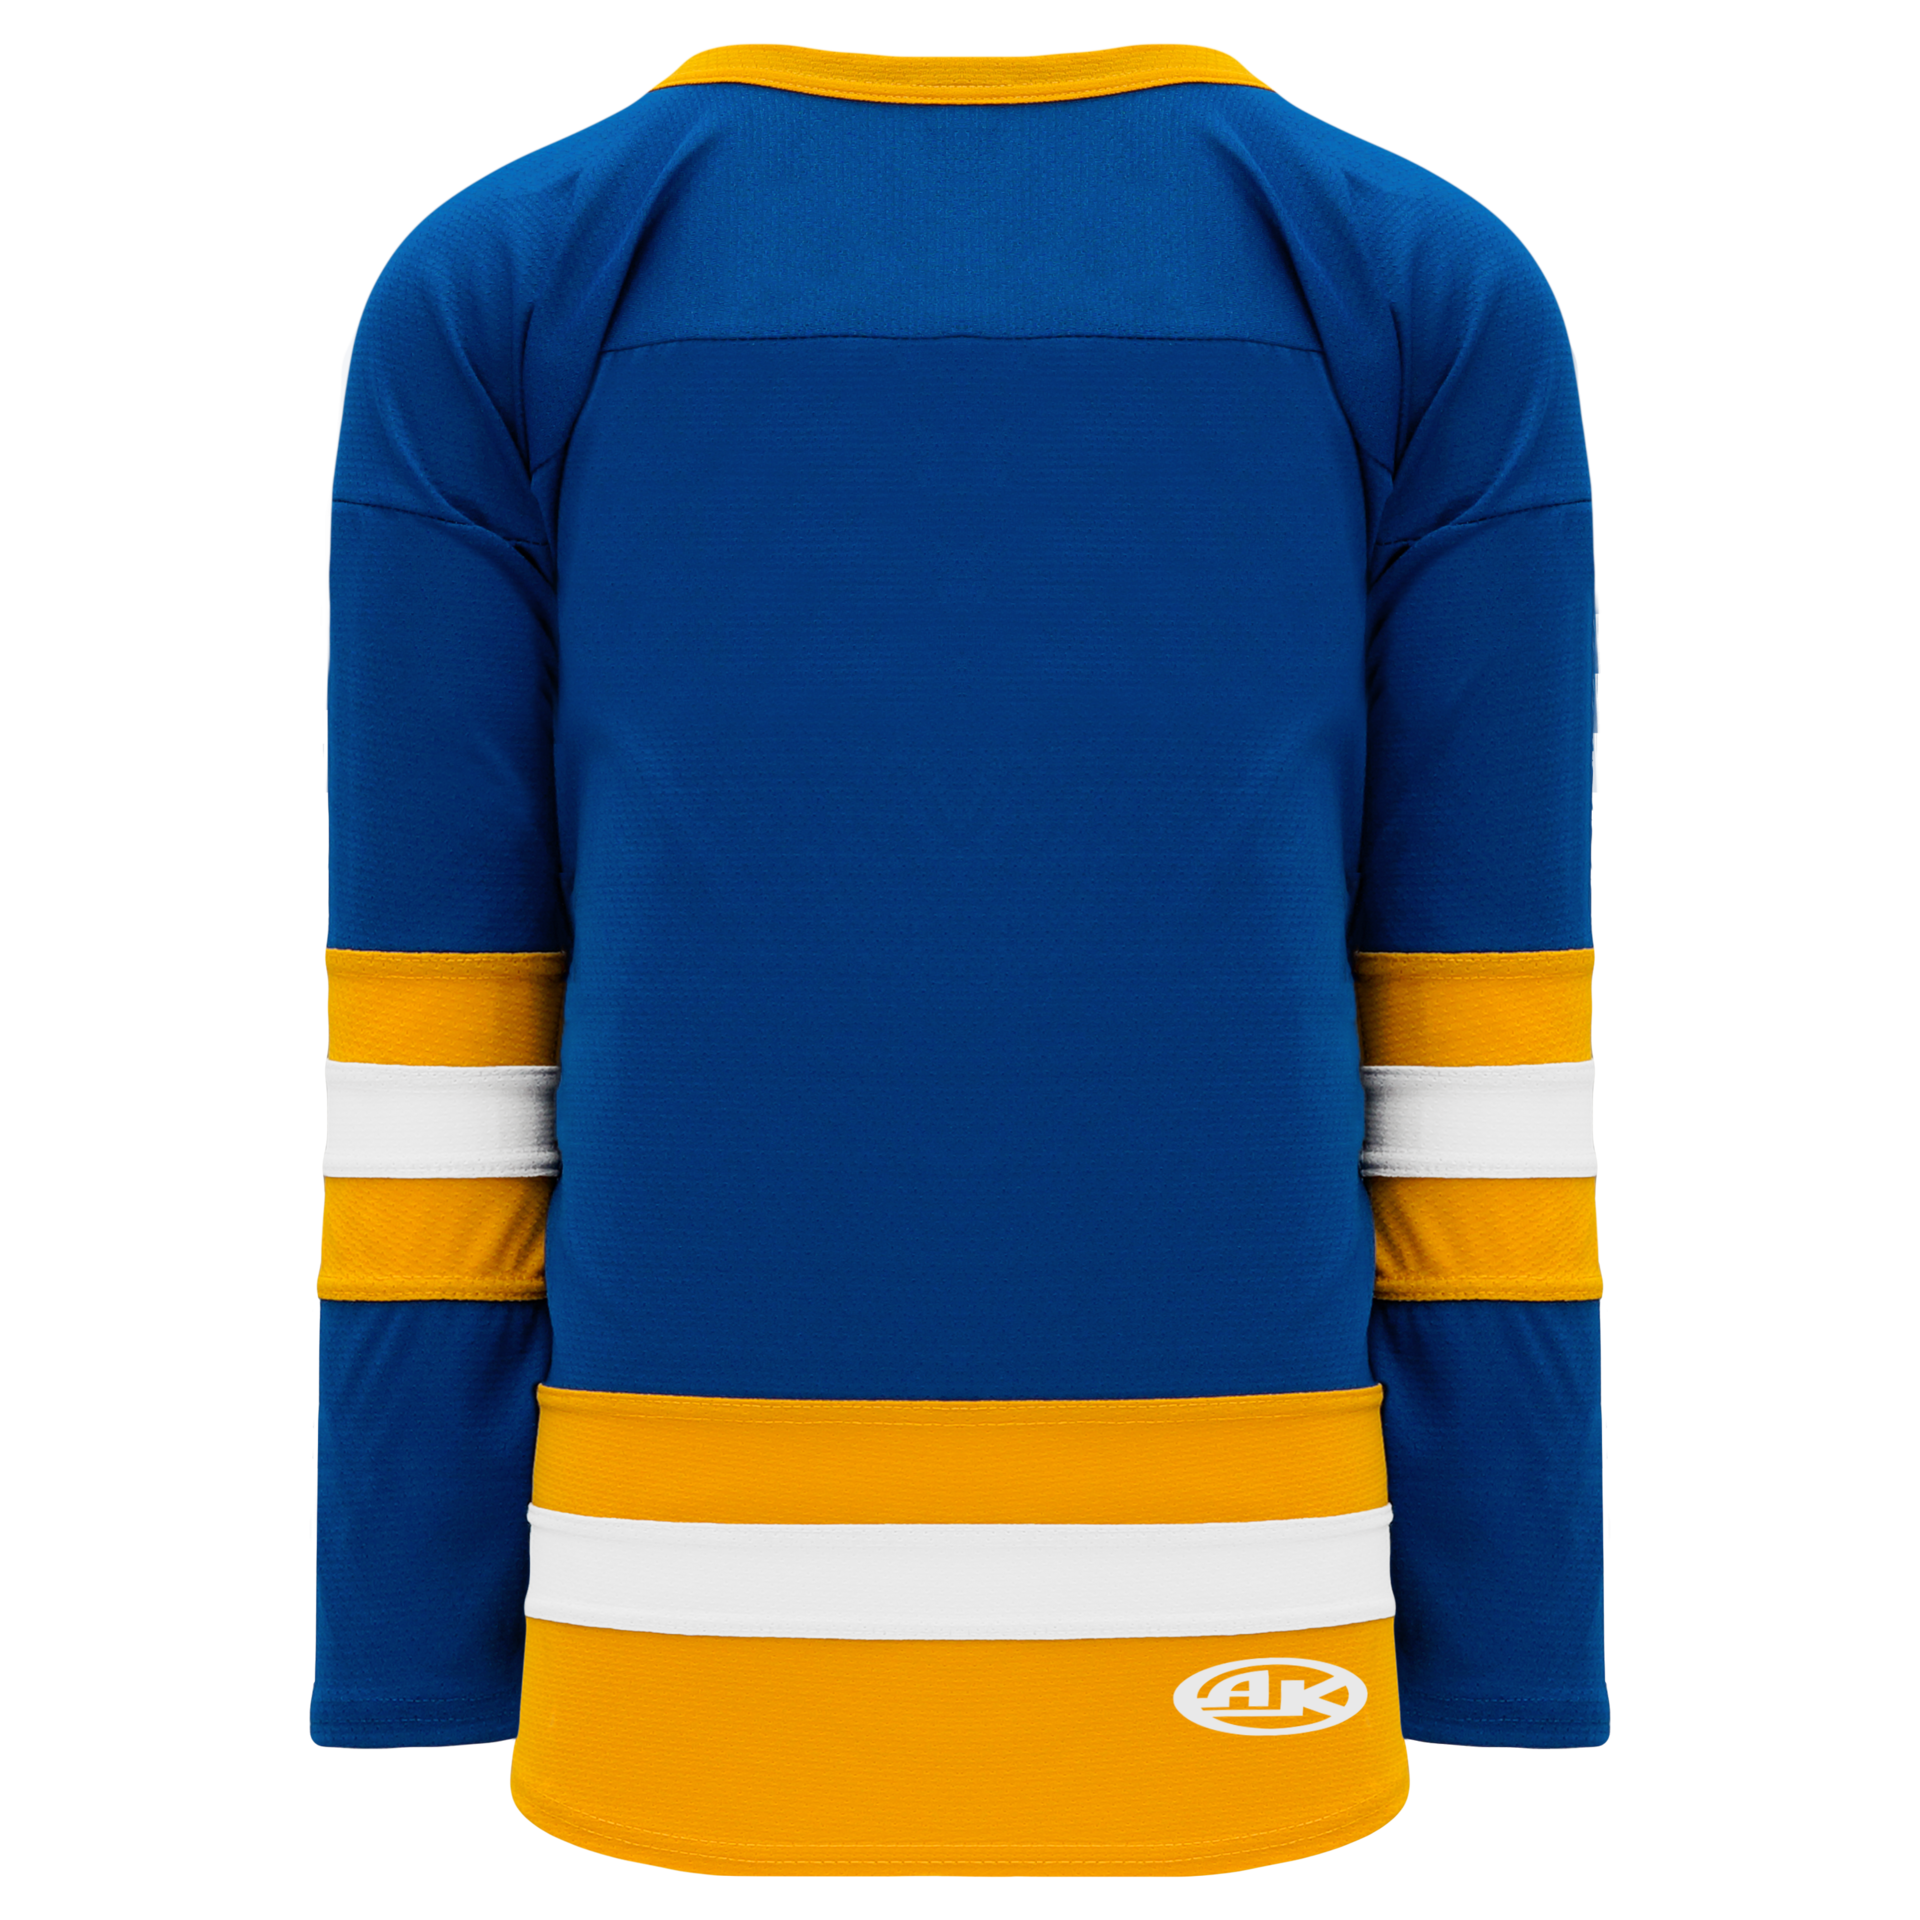 Custom Hockey Jerseys – Royal Retros